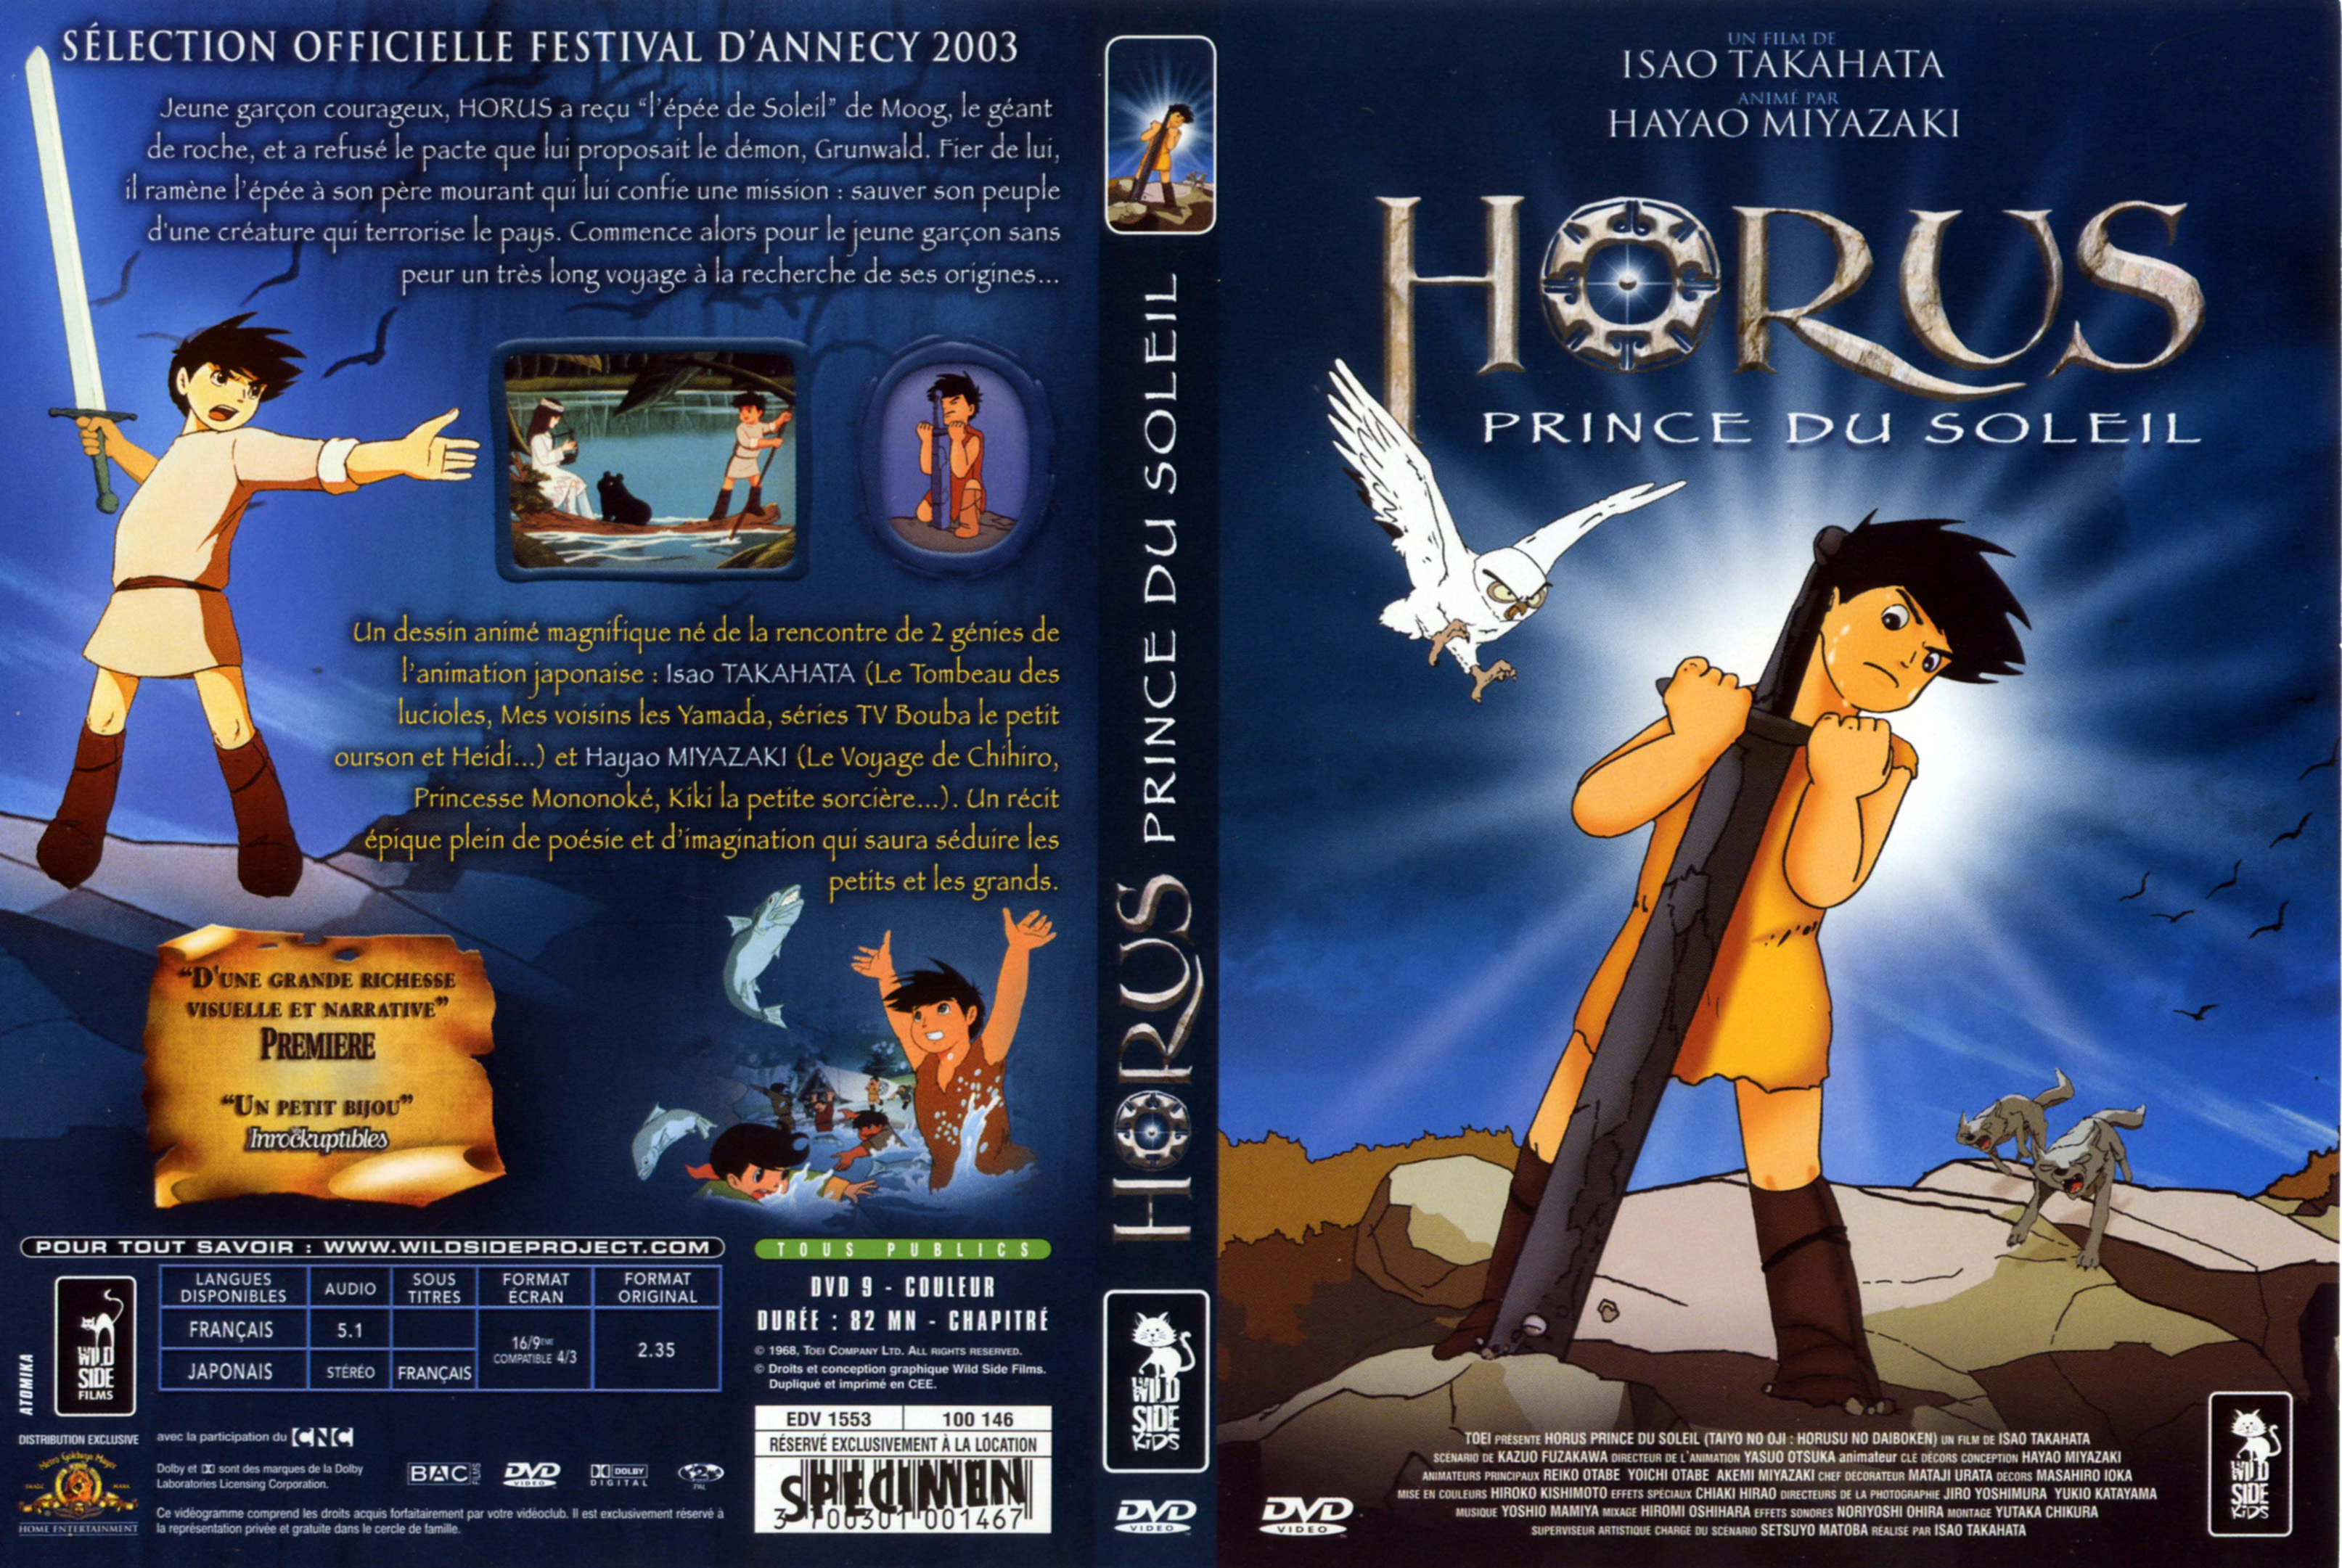 Jaquette DVD Horus prince du soleil v2